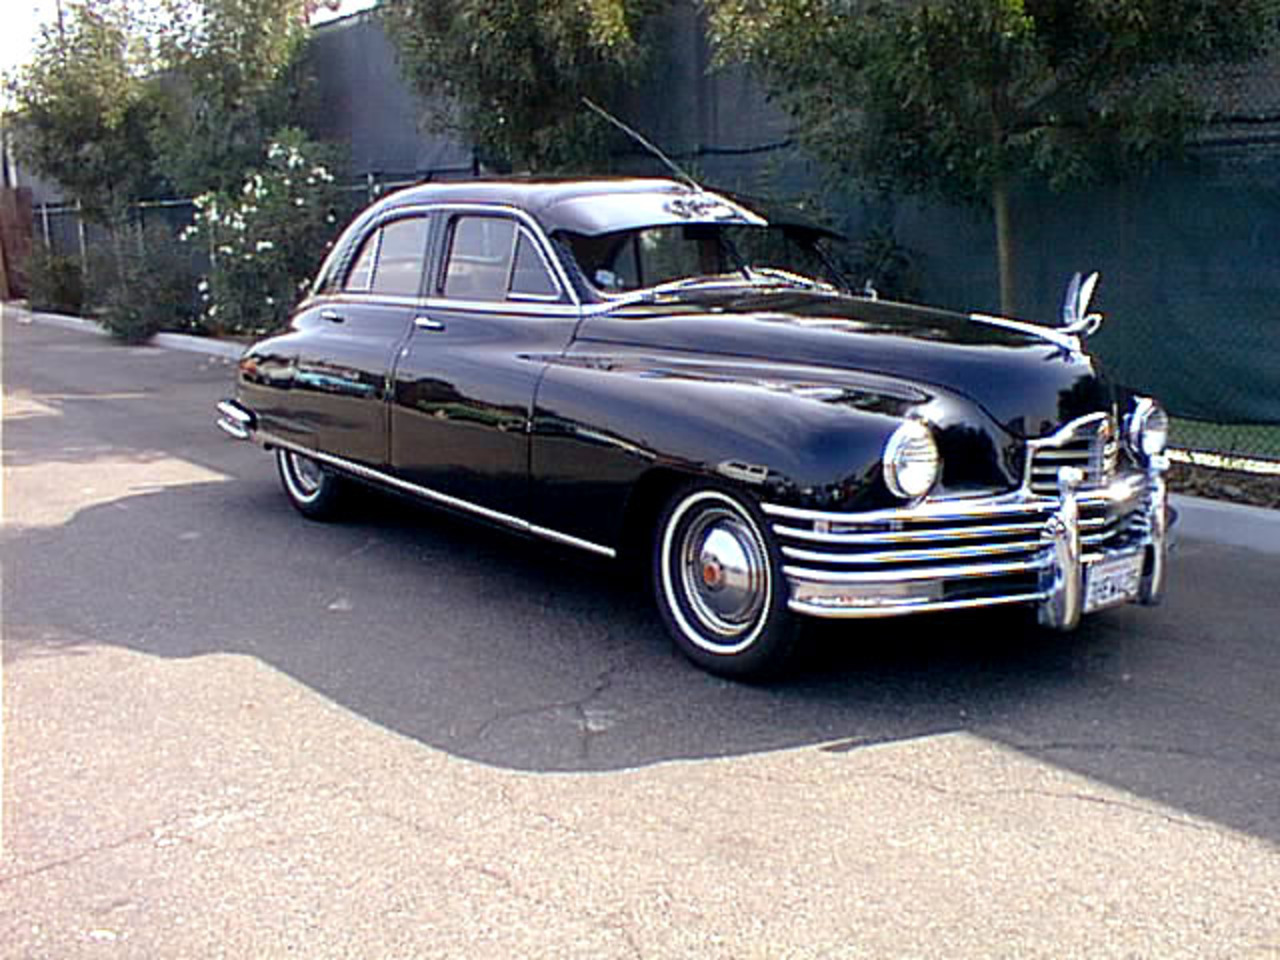 Packard Special 4 Dr Sedan